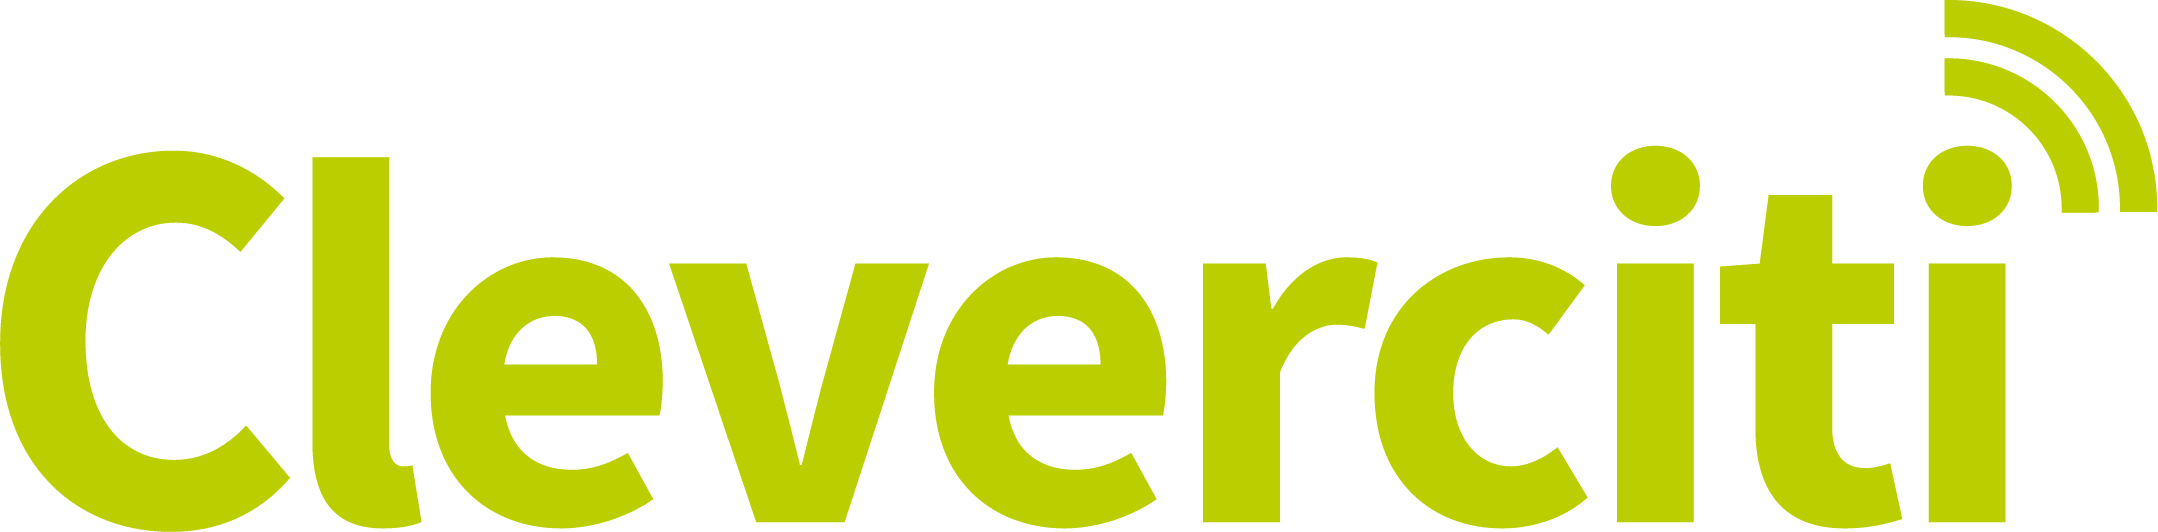 Cleverciti logo